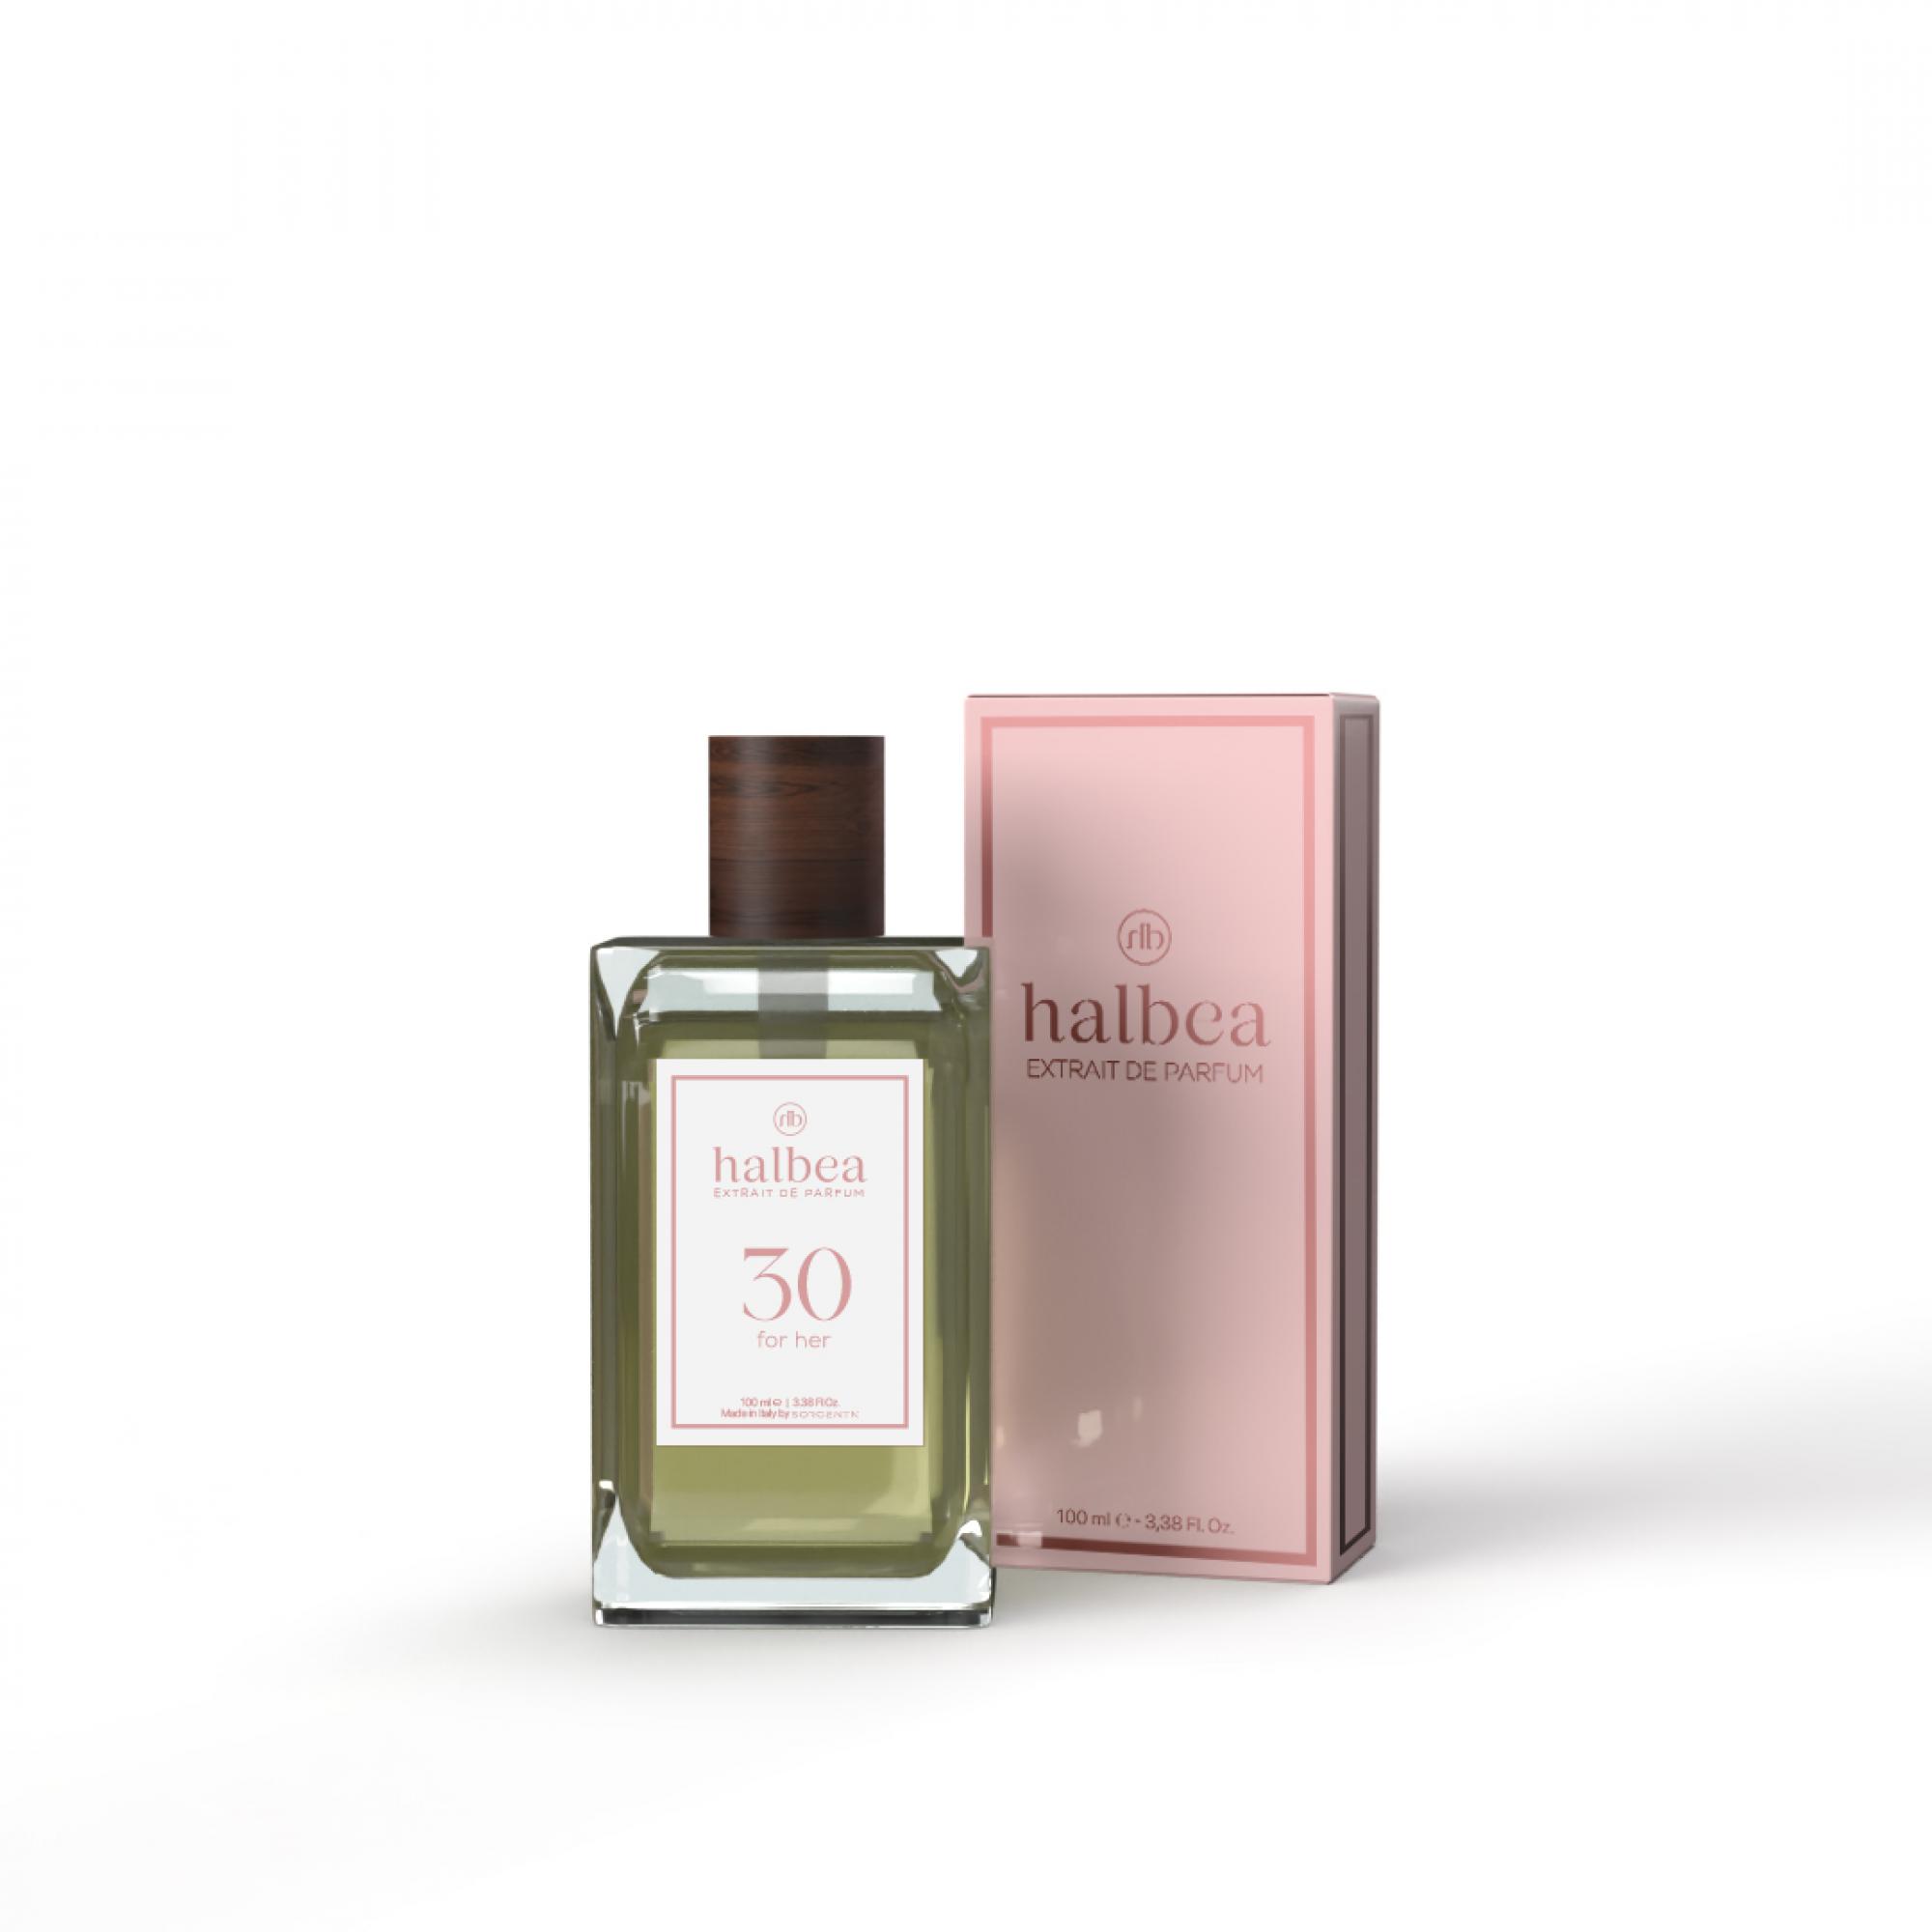 Halbea Parfum Nr. 30 insp. by Lady Million Paco Rabanne 100ml